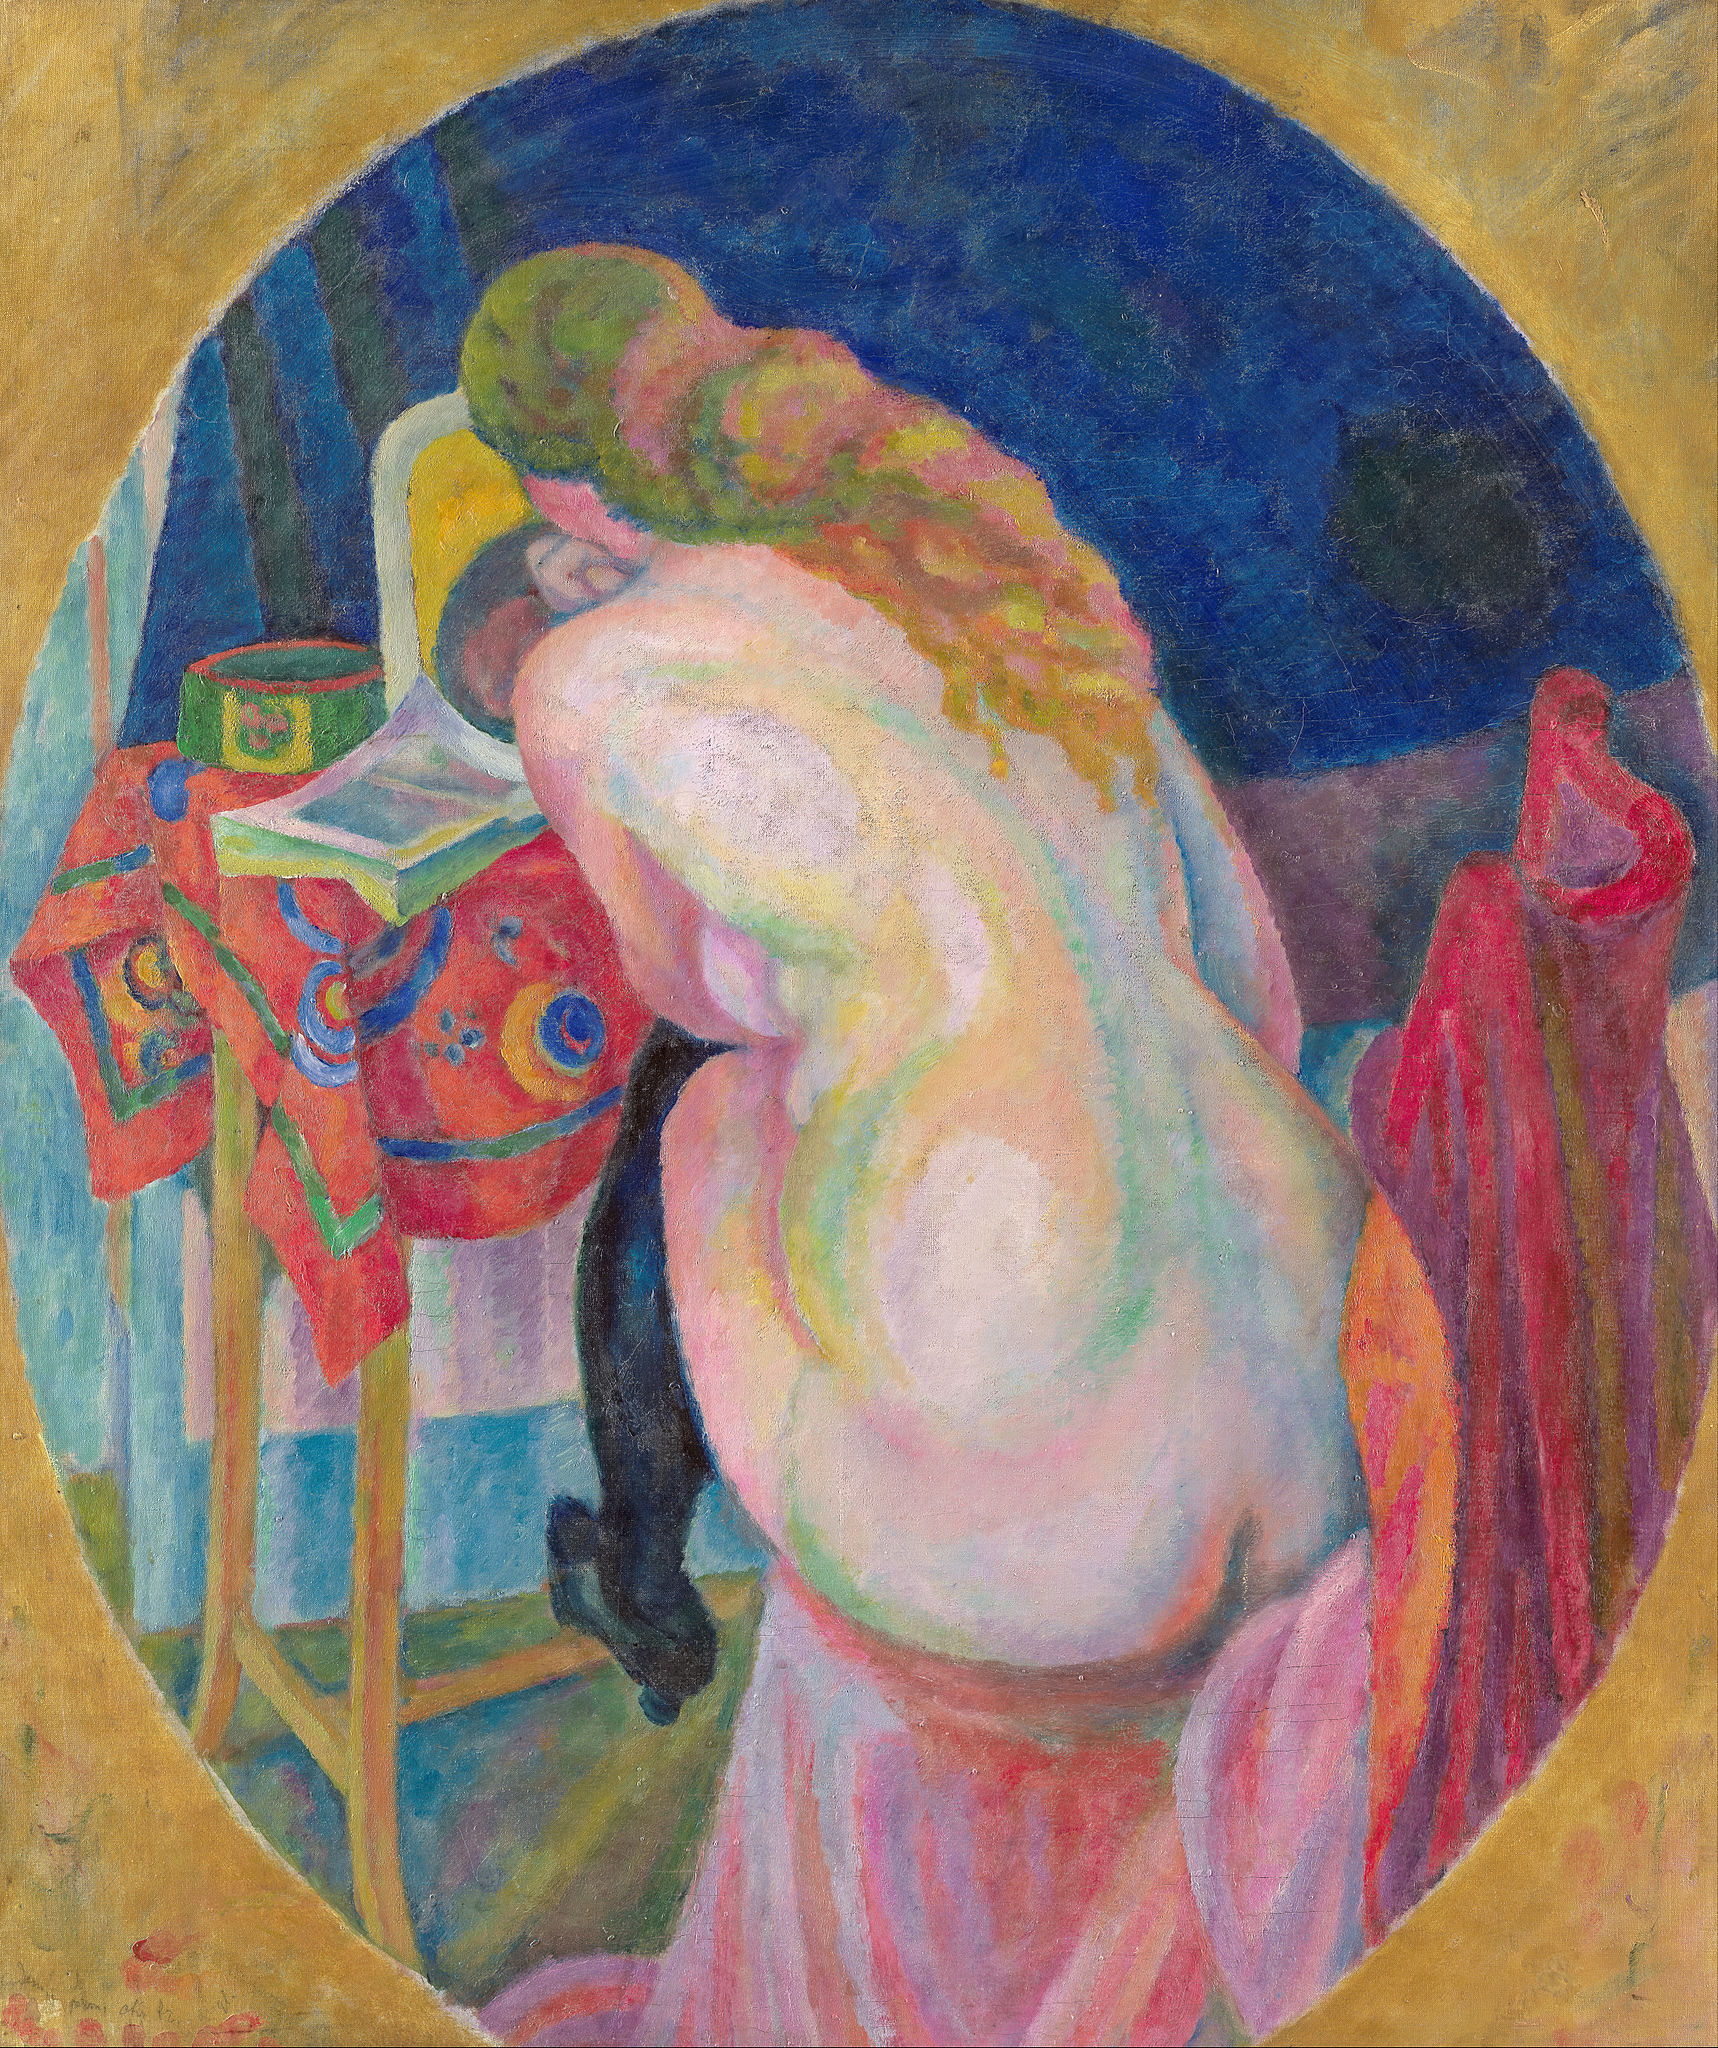 正在閱讀的裸女 by Robert Delaunay - 1915 - 86.2 x 72.4 cm 